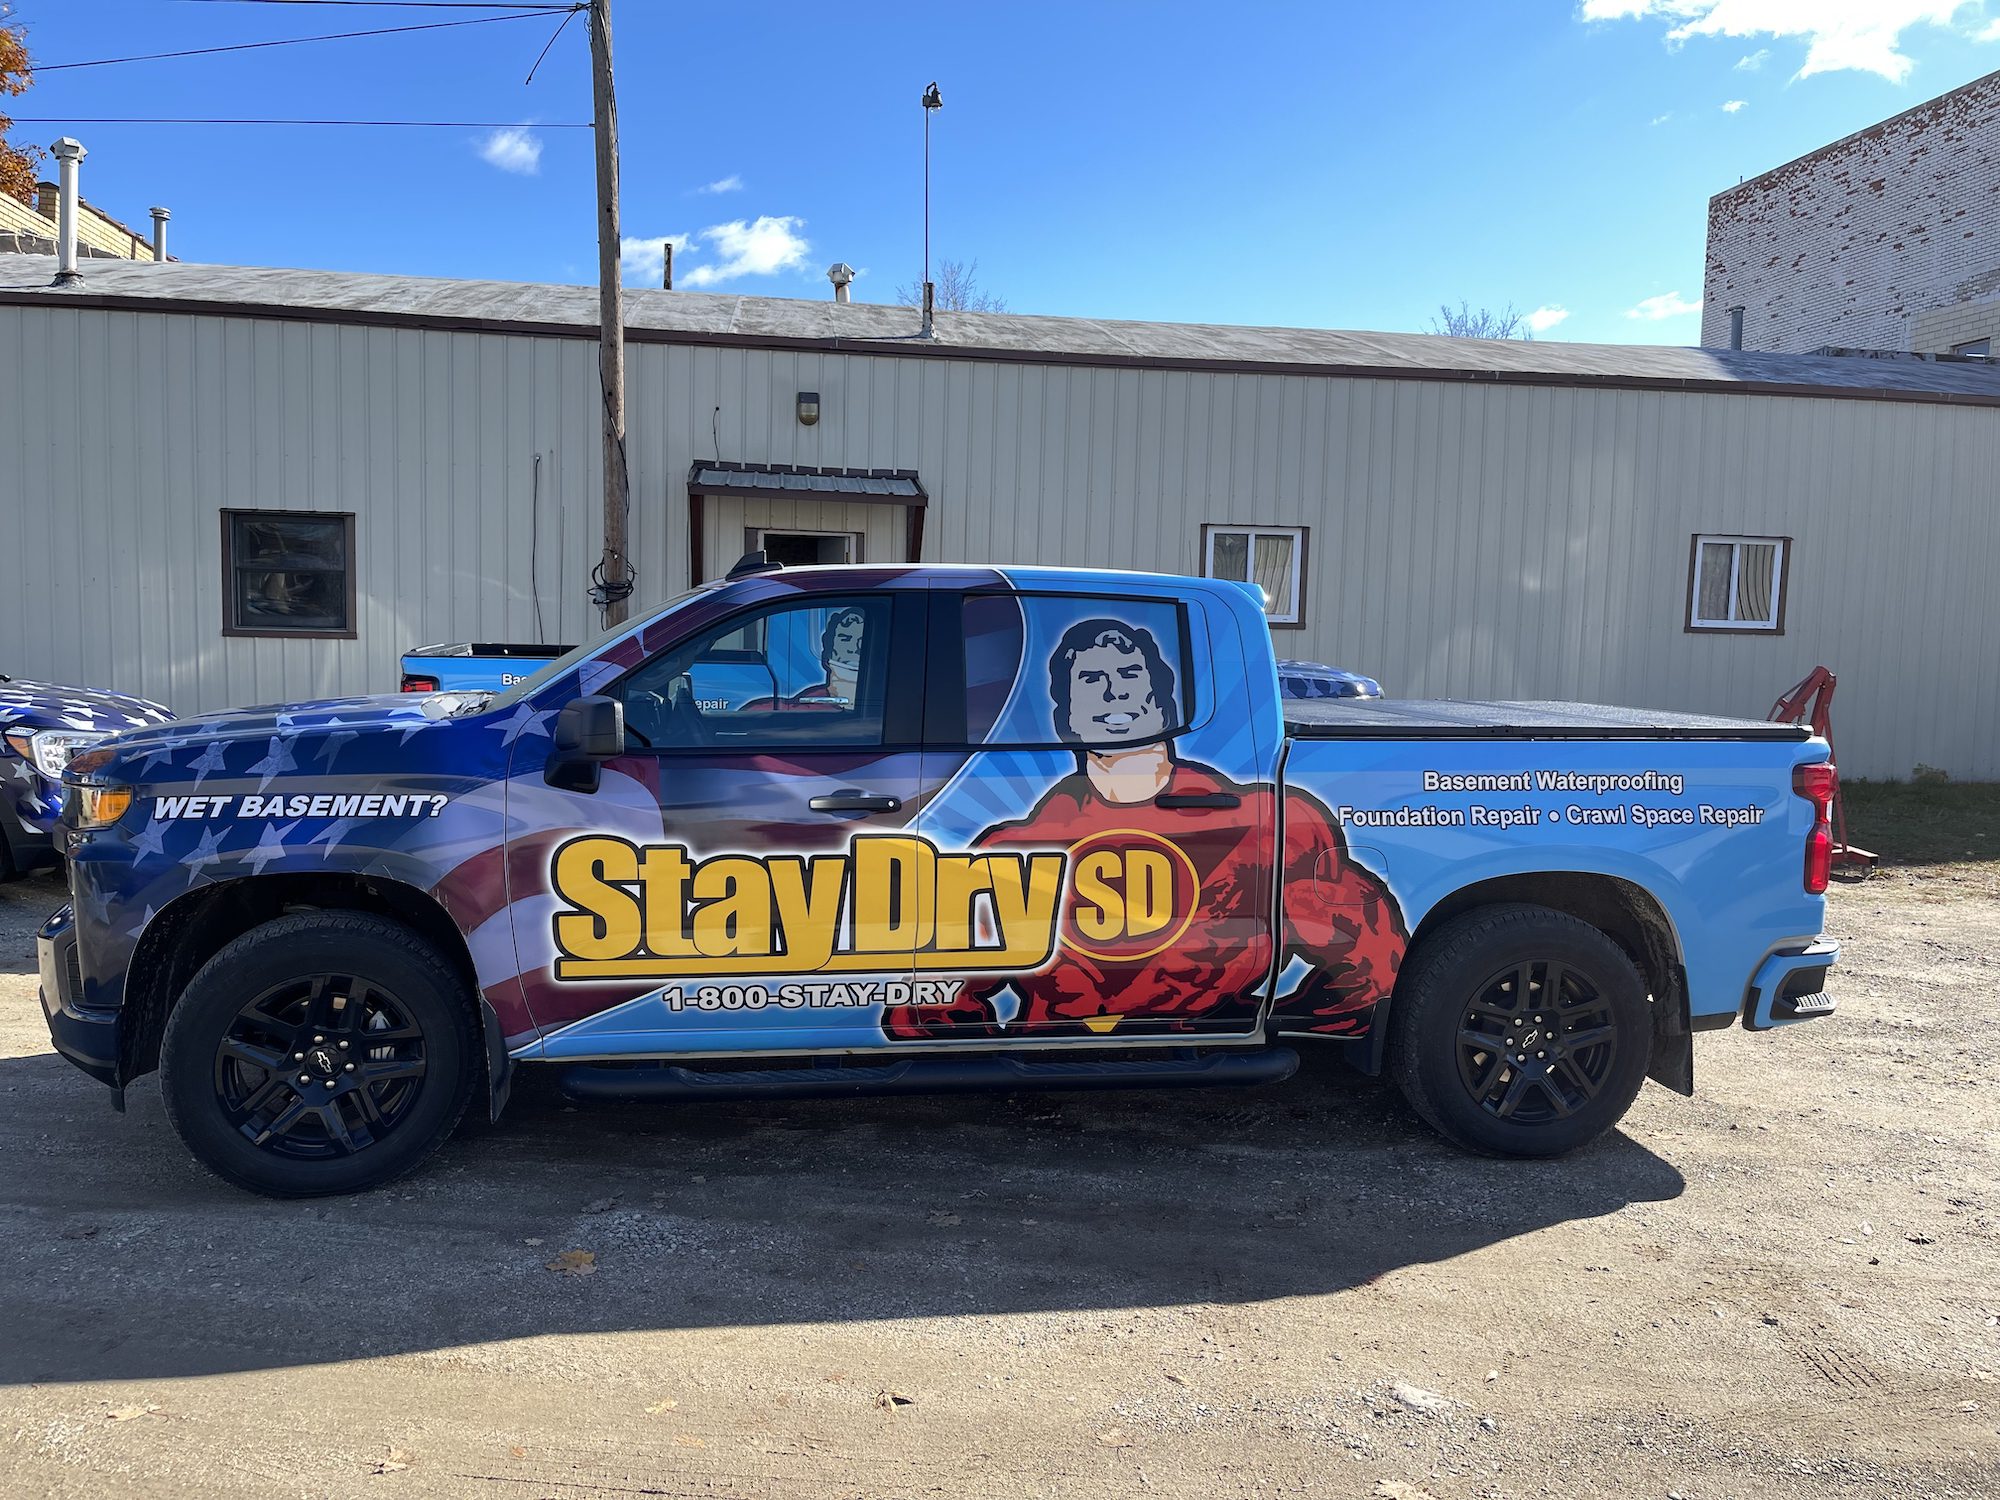 StayDry michigan waterproofing foundation repair truck